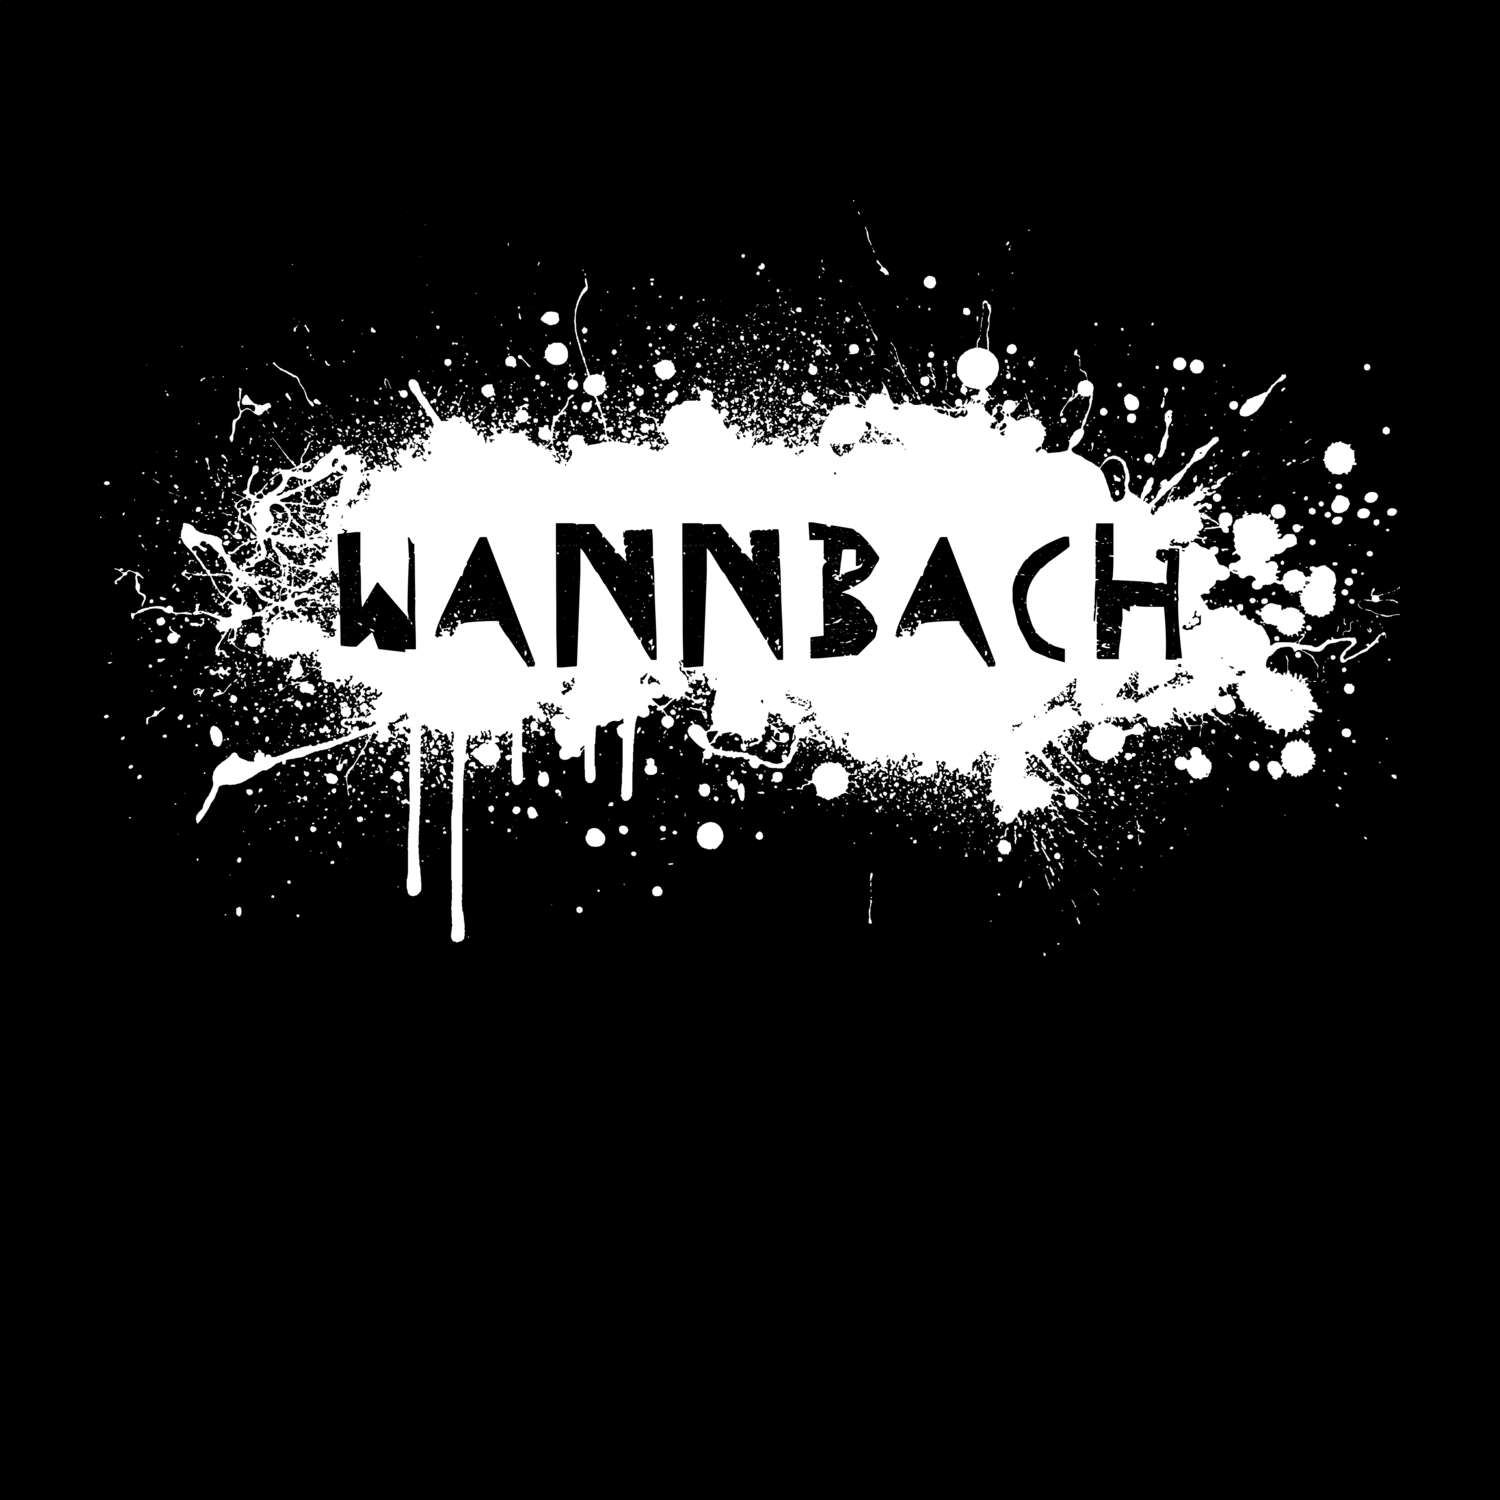 Wannbach T-Shirt »Paint Splash Punk«